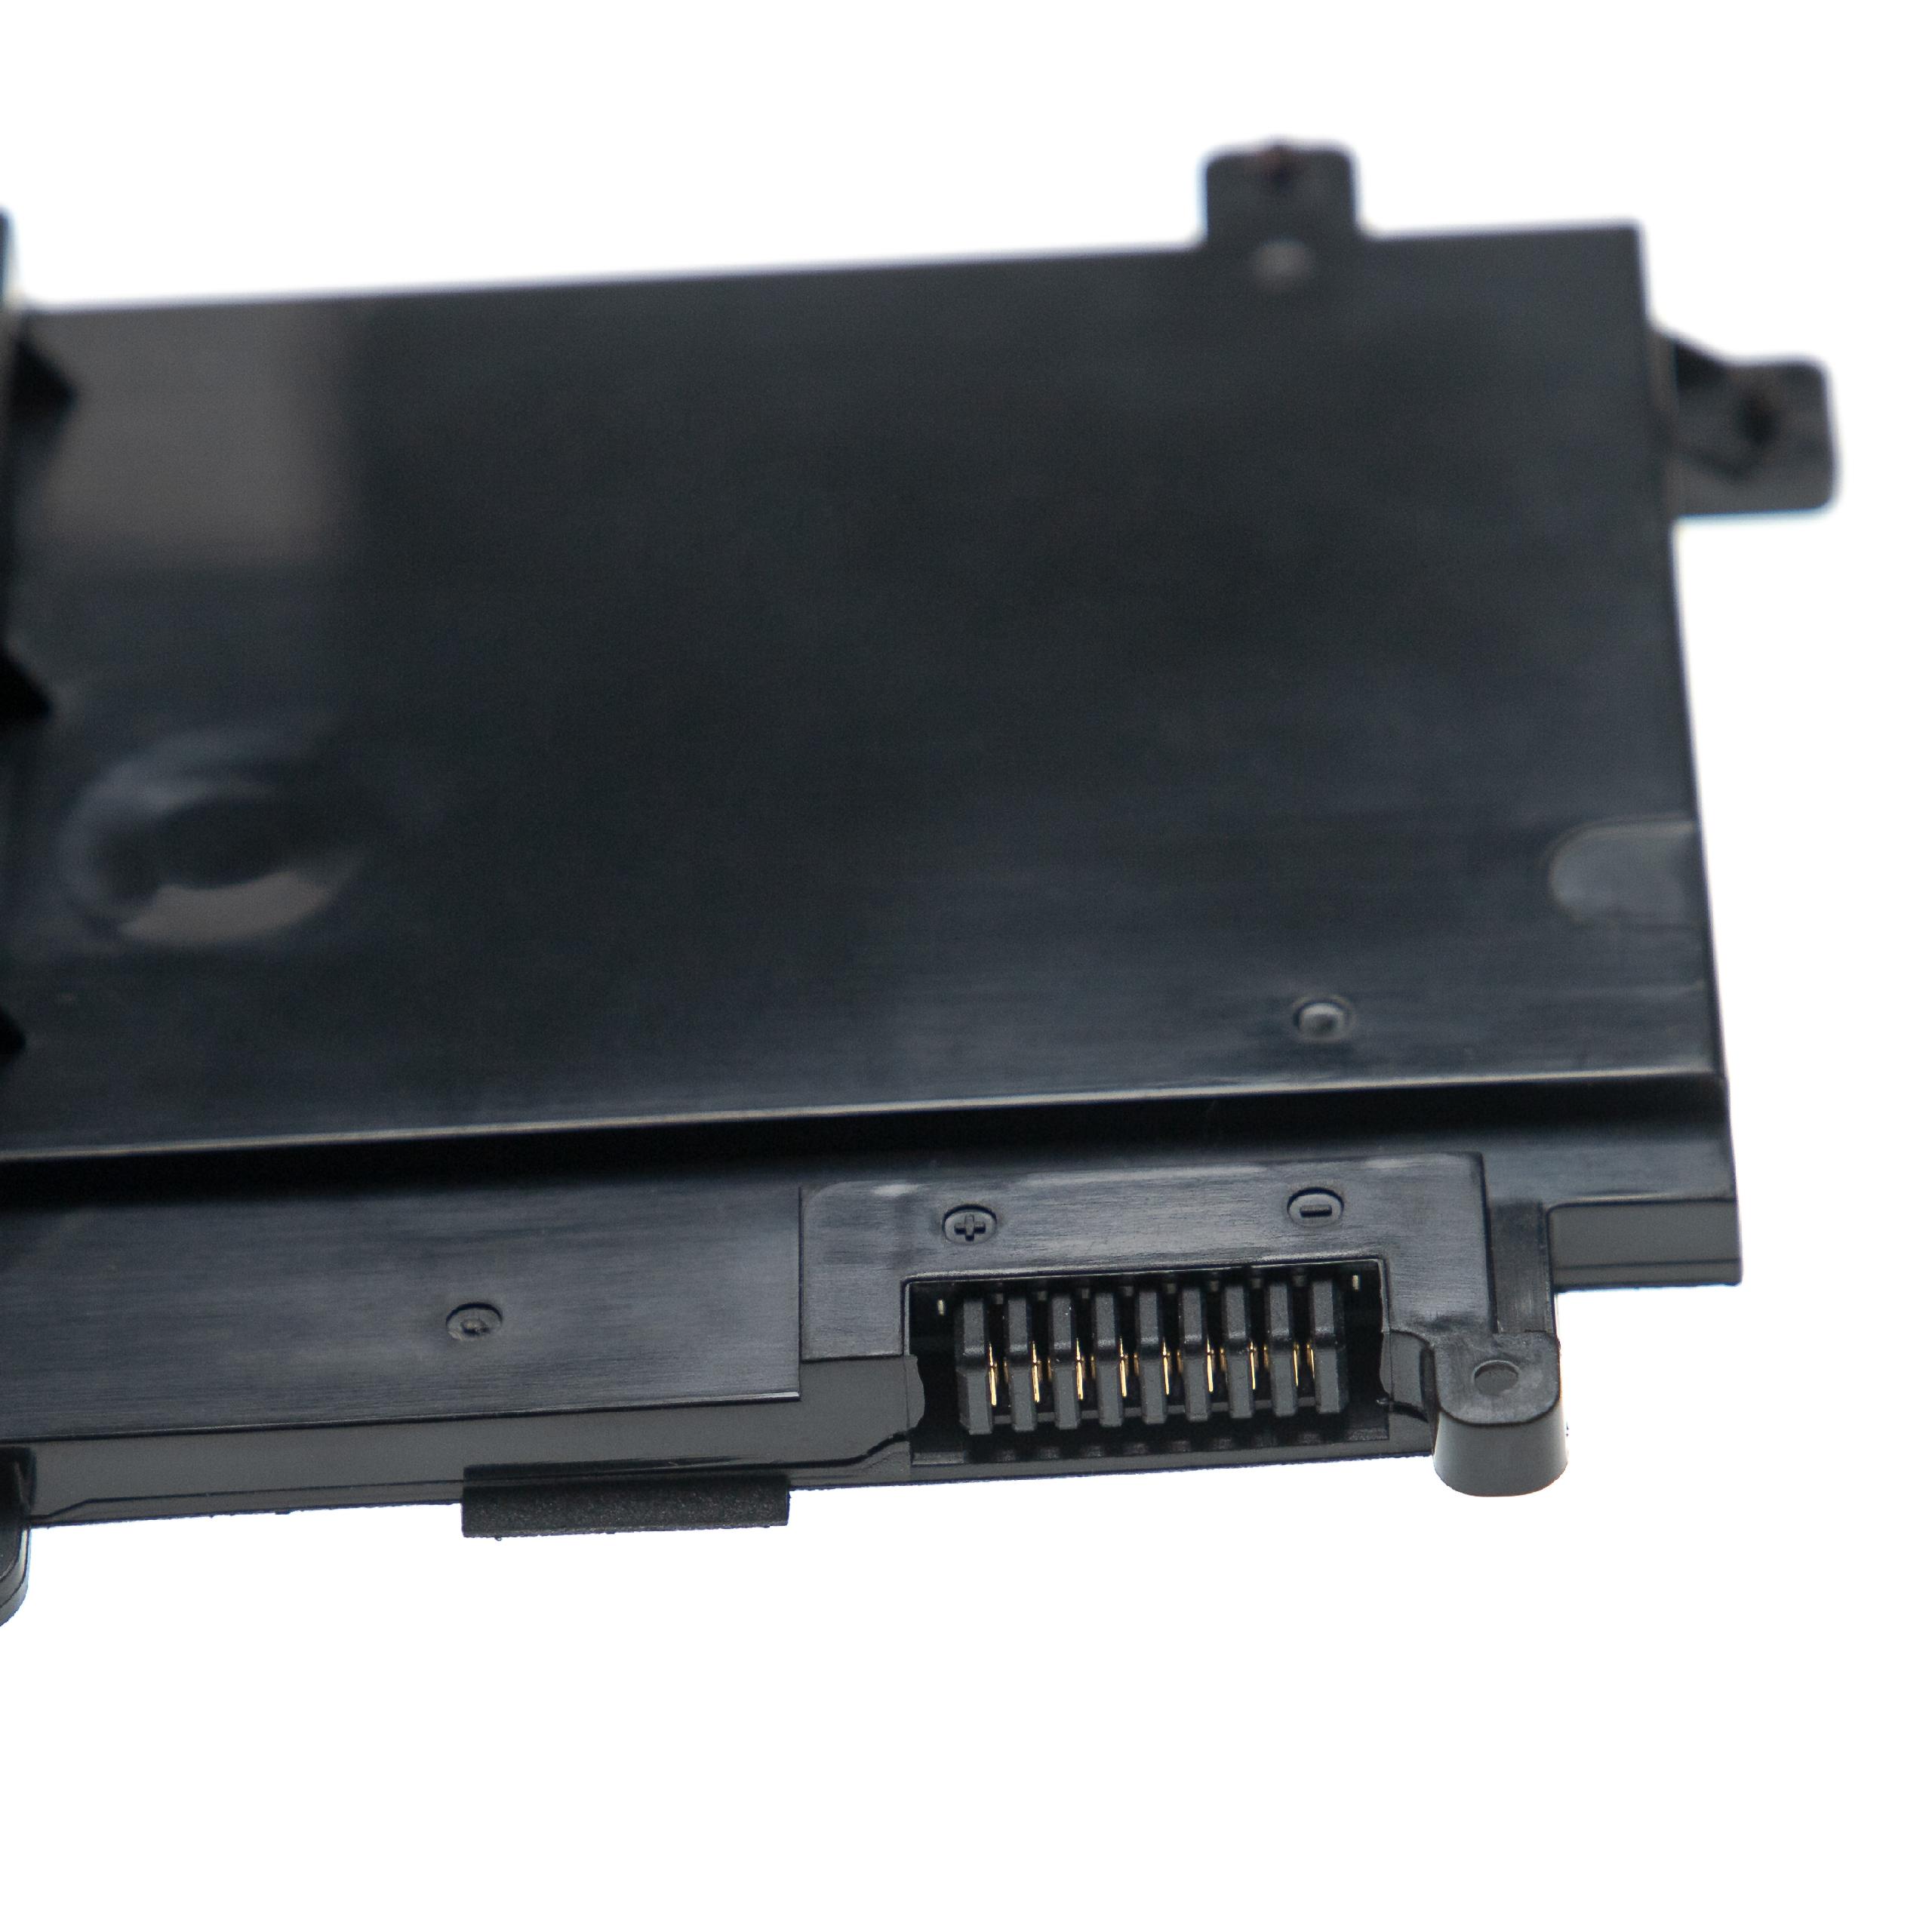 Akumulator do laptopa zamiennik HP 801517-222, 801517-221, 801517-232, 801517-231 - 3400 mAh 11,4 V LiPo